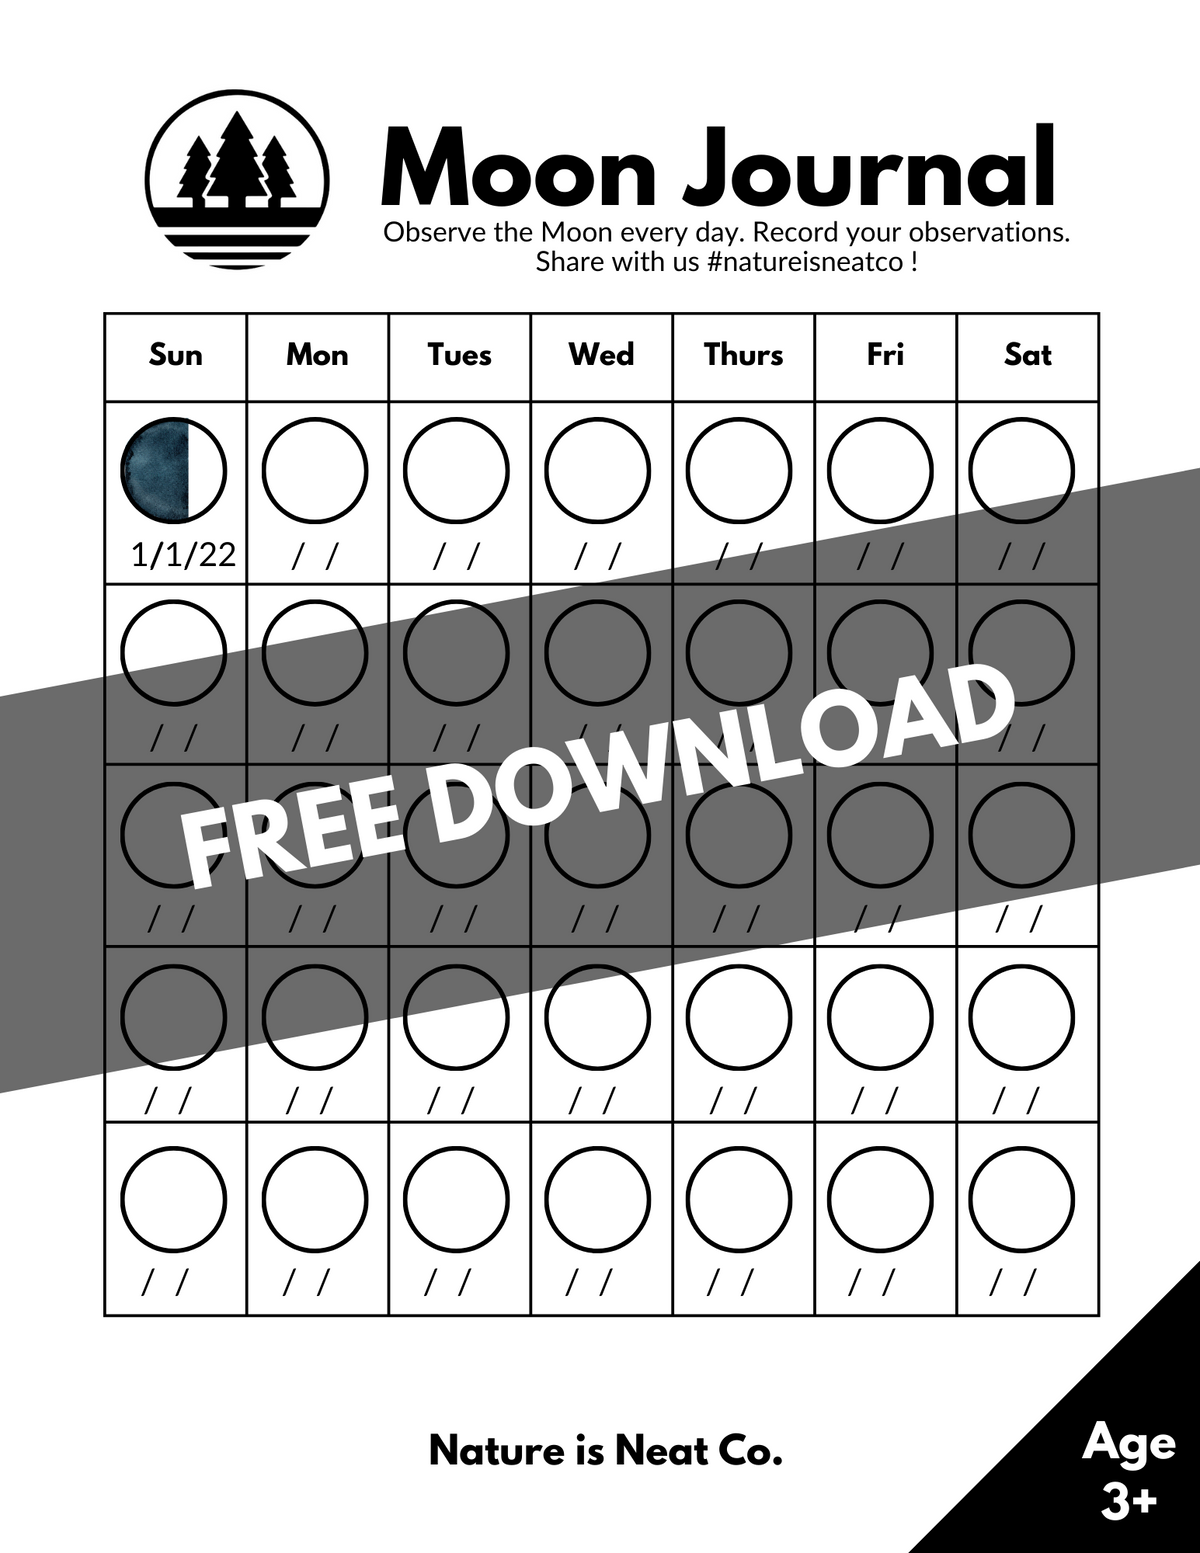 FREE: Moon Journal